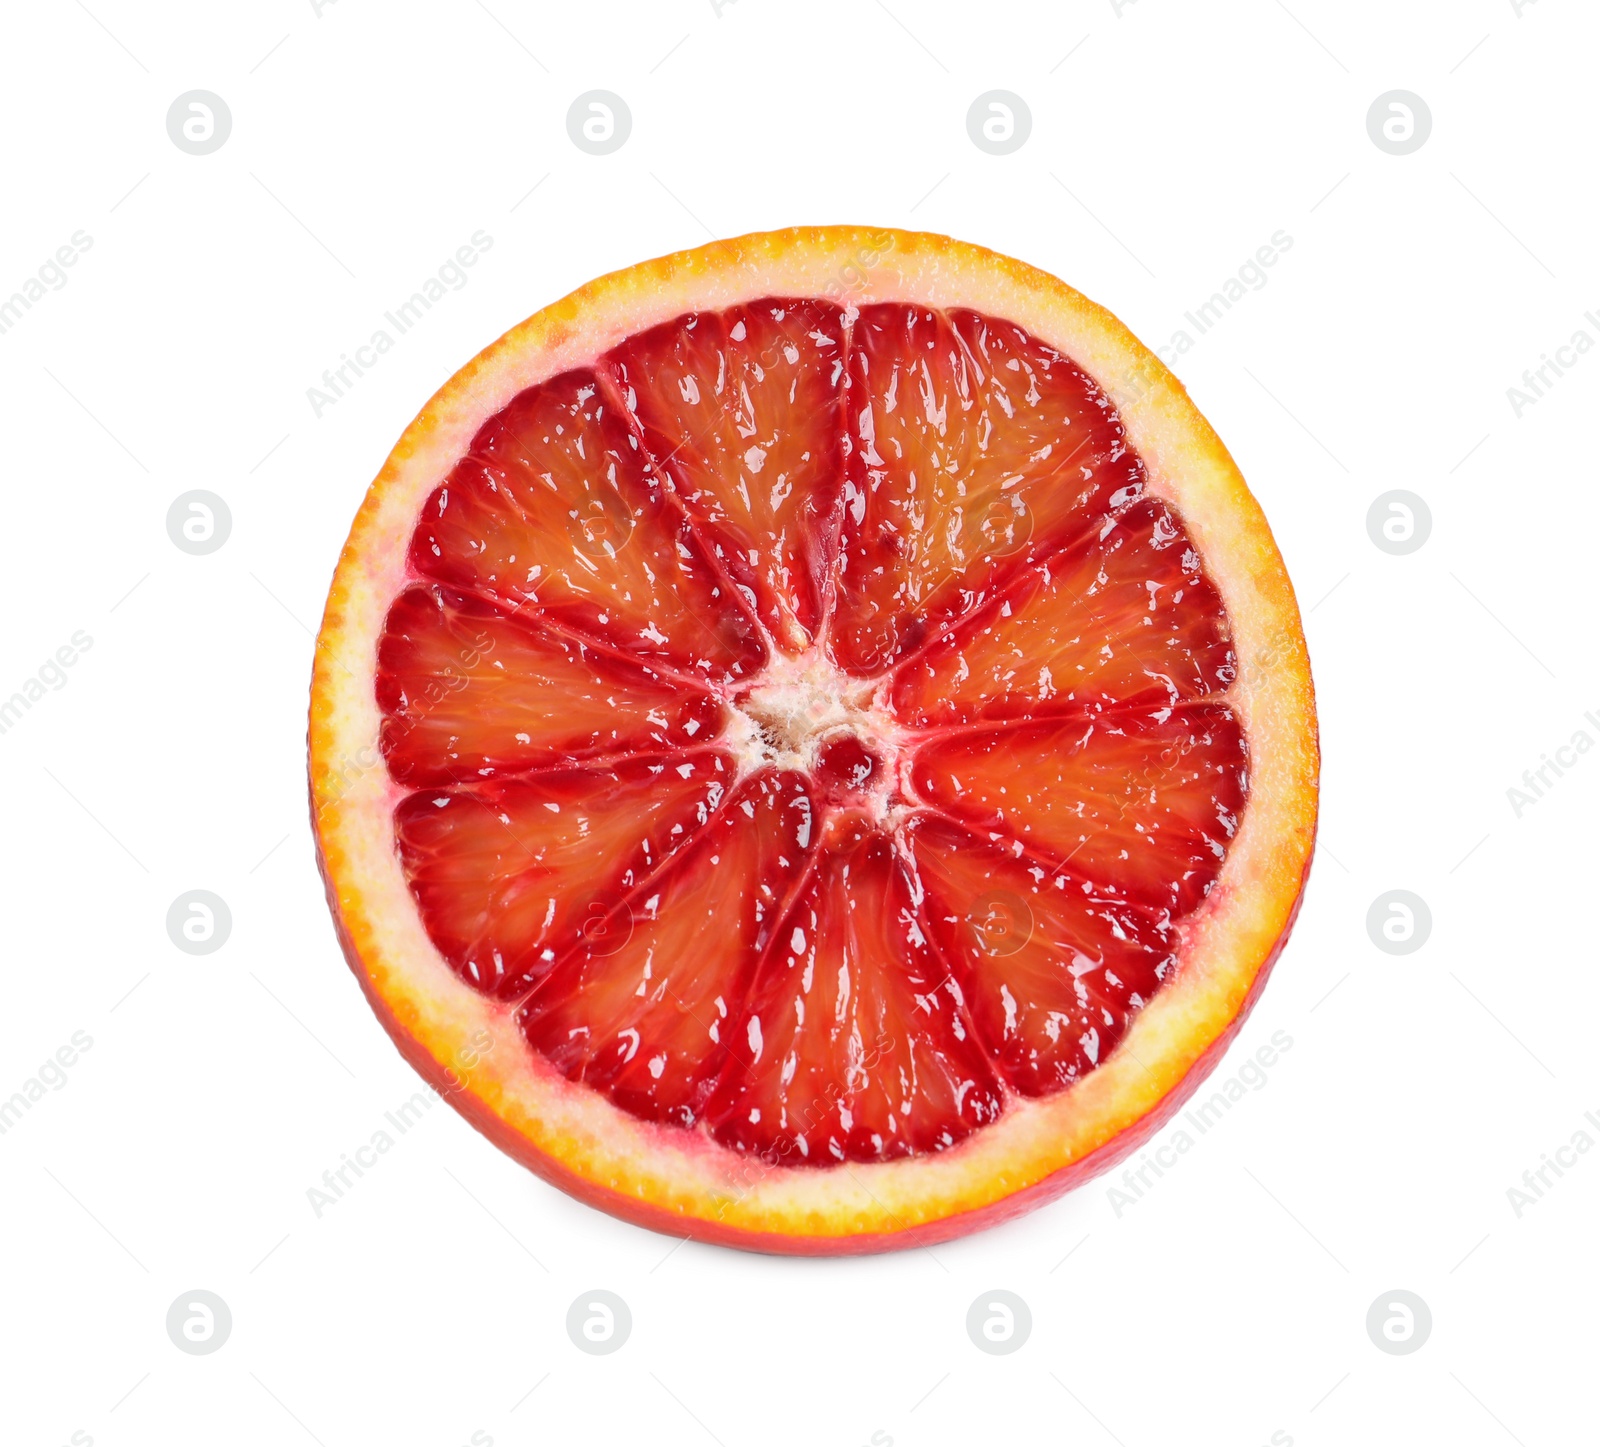 Photo of Cut ripe red orange isolated on white